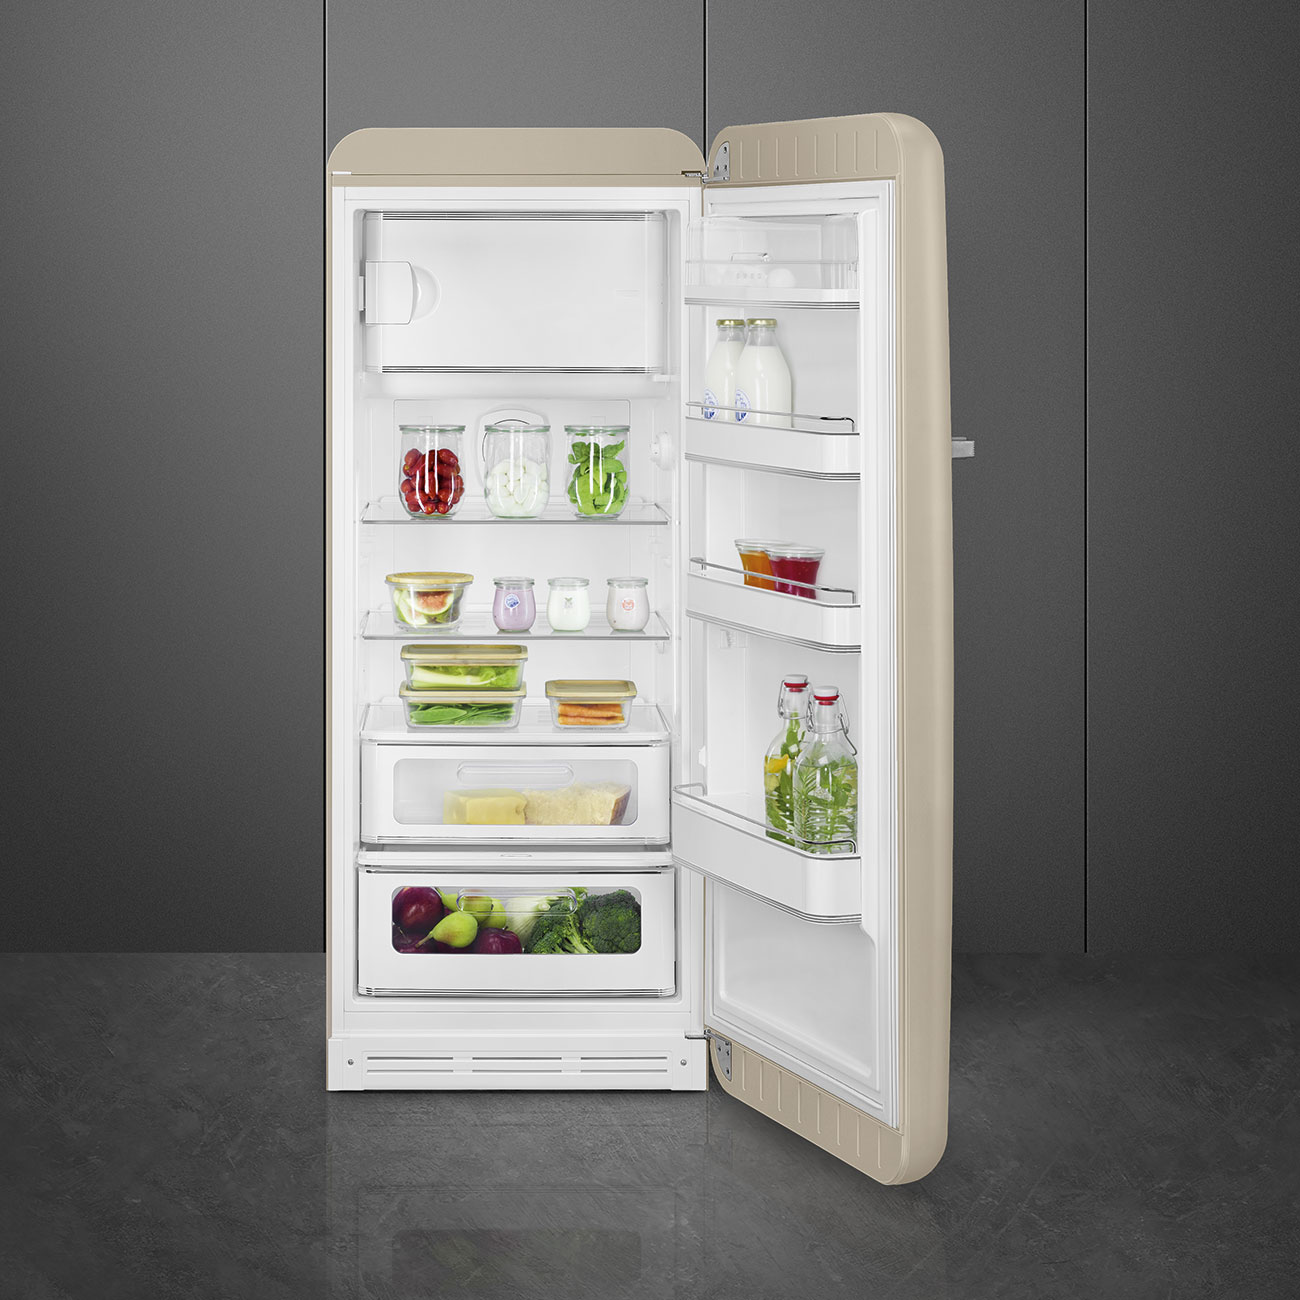 Perfectly Pale refrigerator - Smeg_9